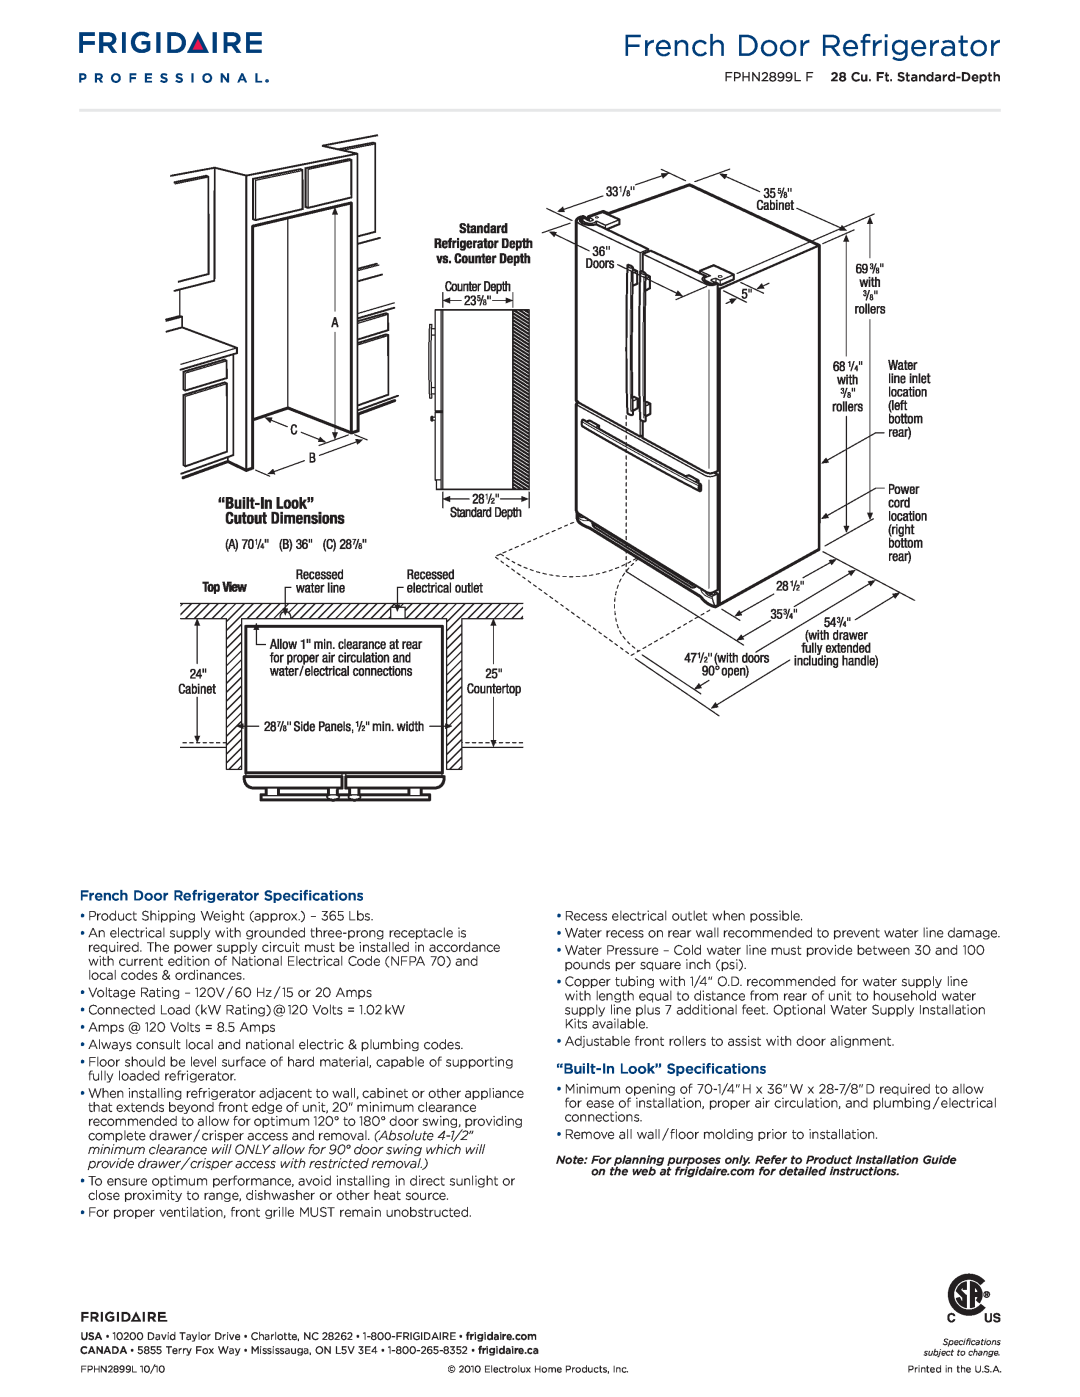 Frigidaire FPHN2899LF dimensions French Door Refrigerator Specifications, “Built-InLook” Specifications 